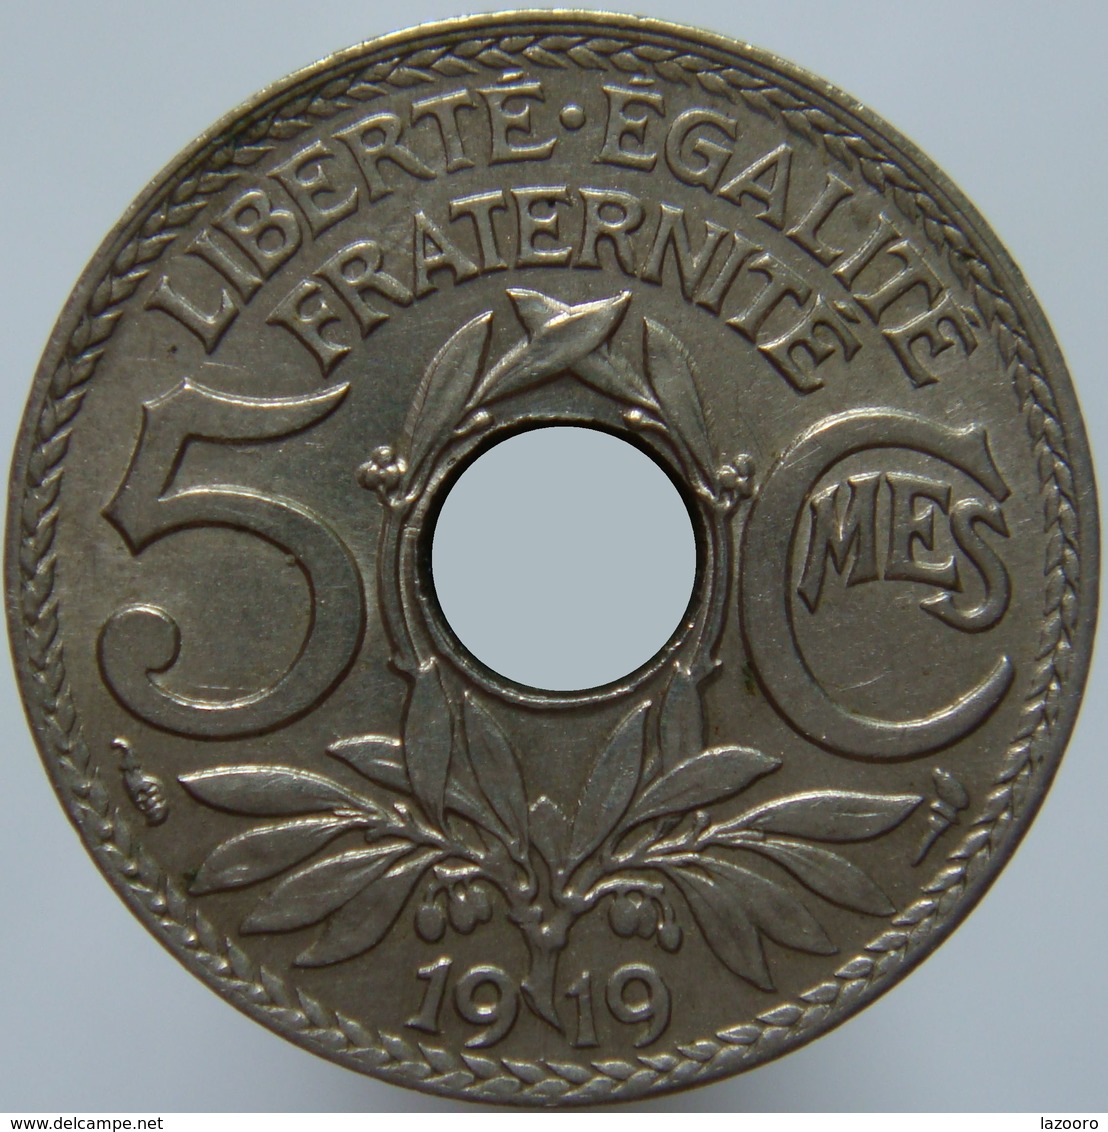 LaZooRo: France 5 Centems 1919 XF / UNC - 5 Centimes